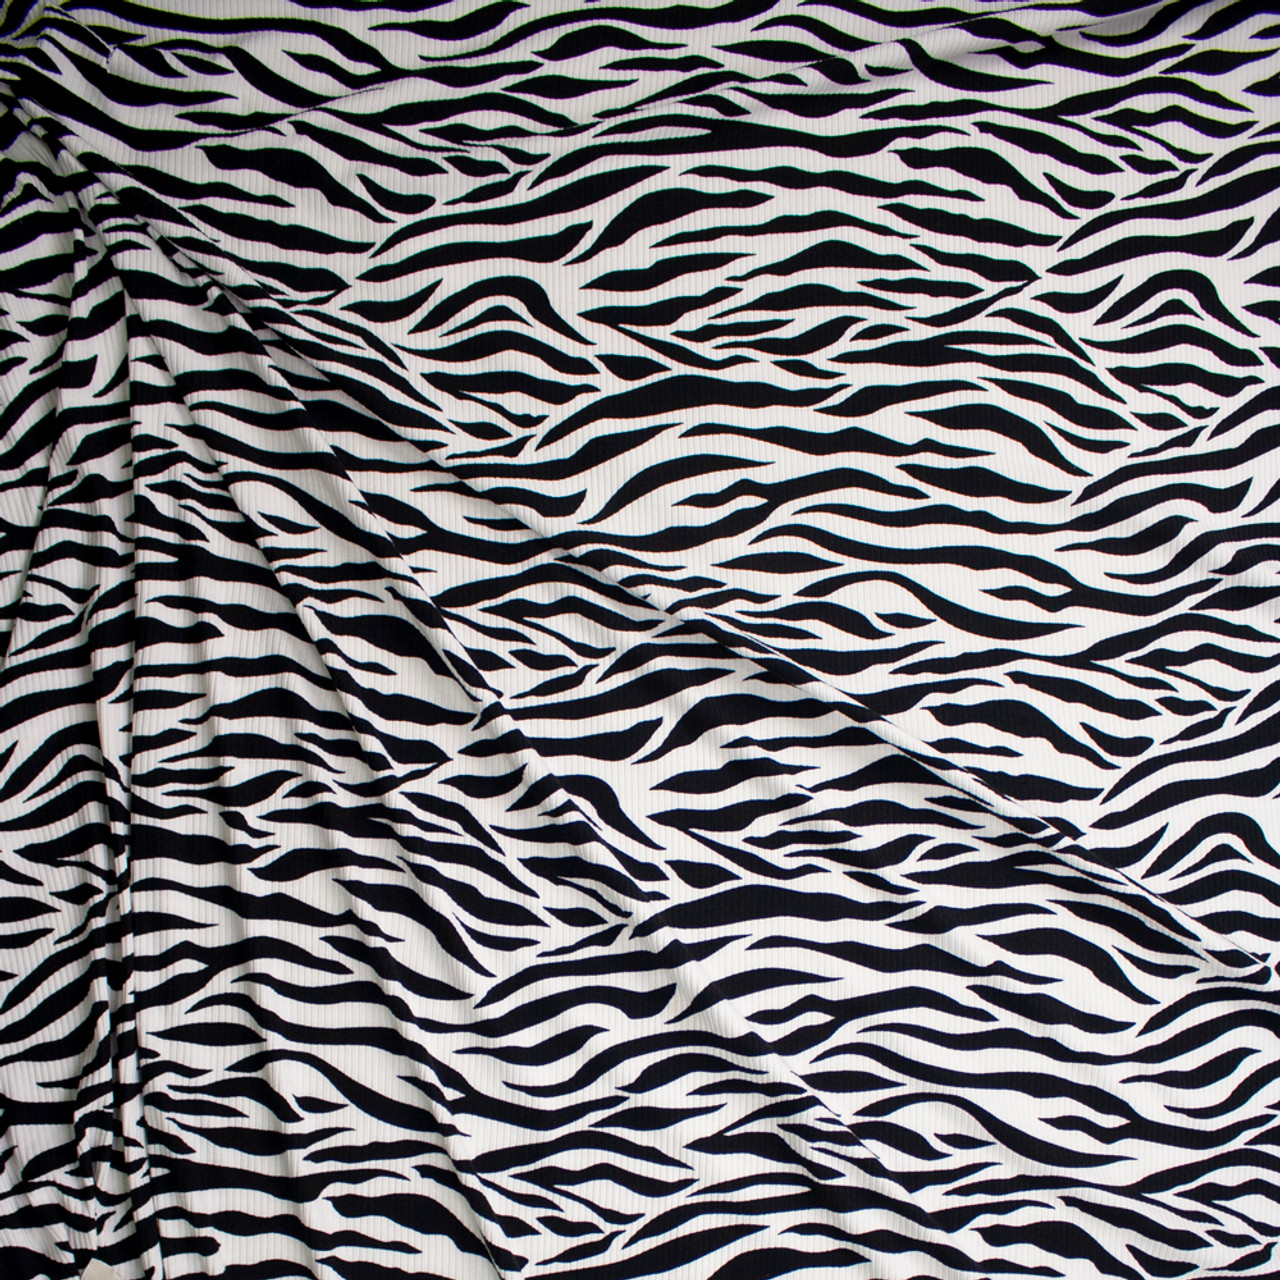 Kobreclutch Zebra Textured Animal Print